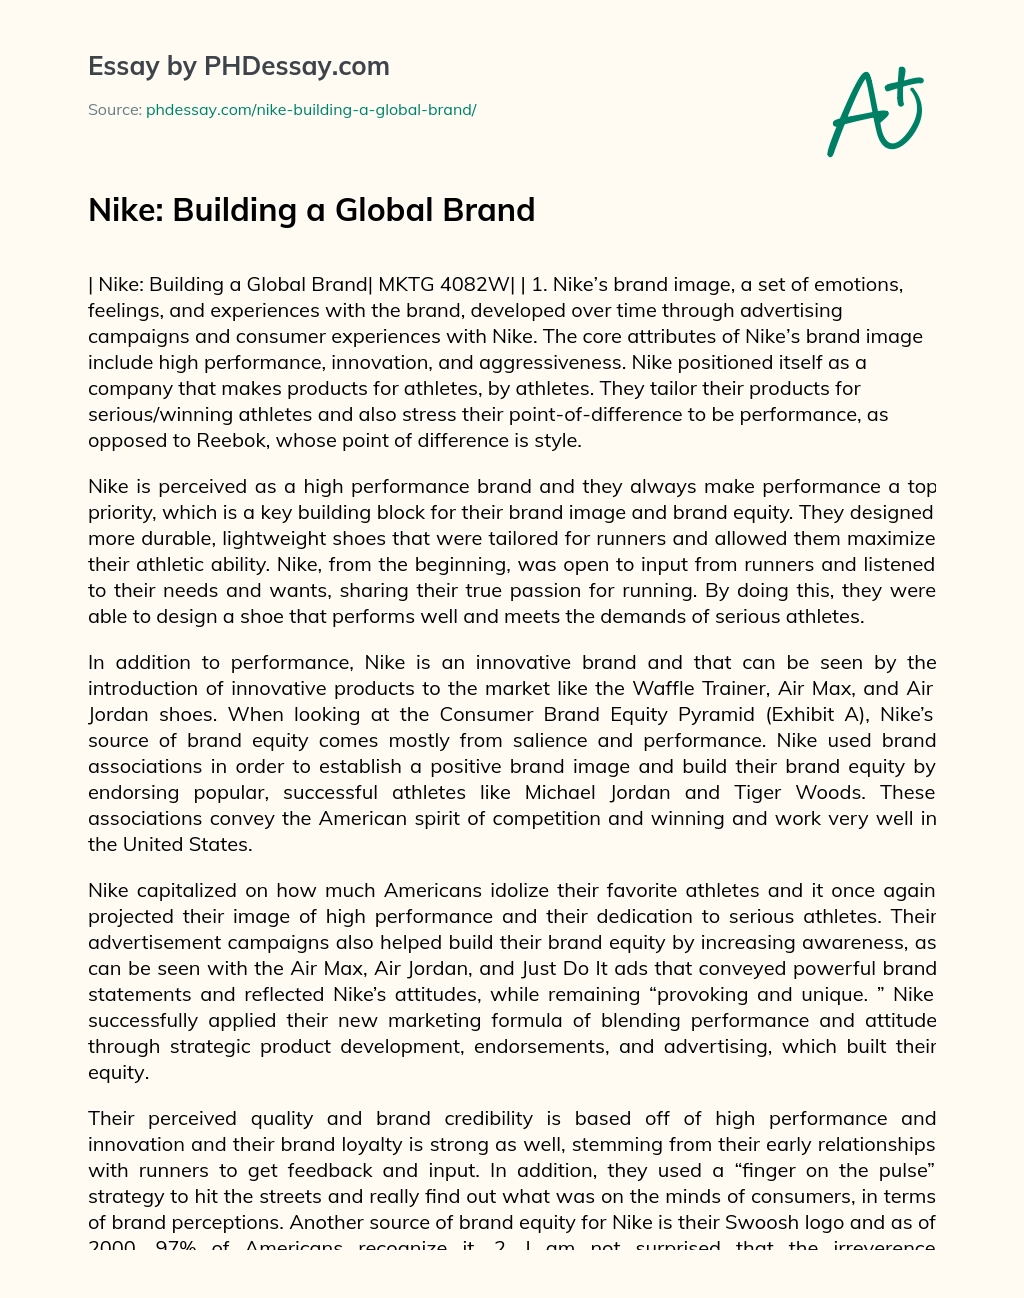 Nike: Building a Global Brand essay